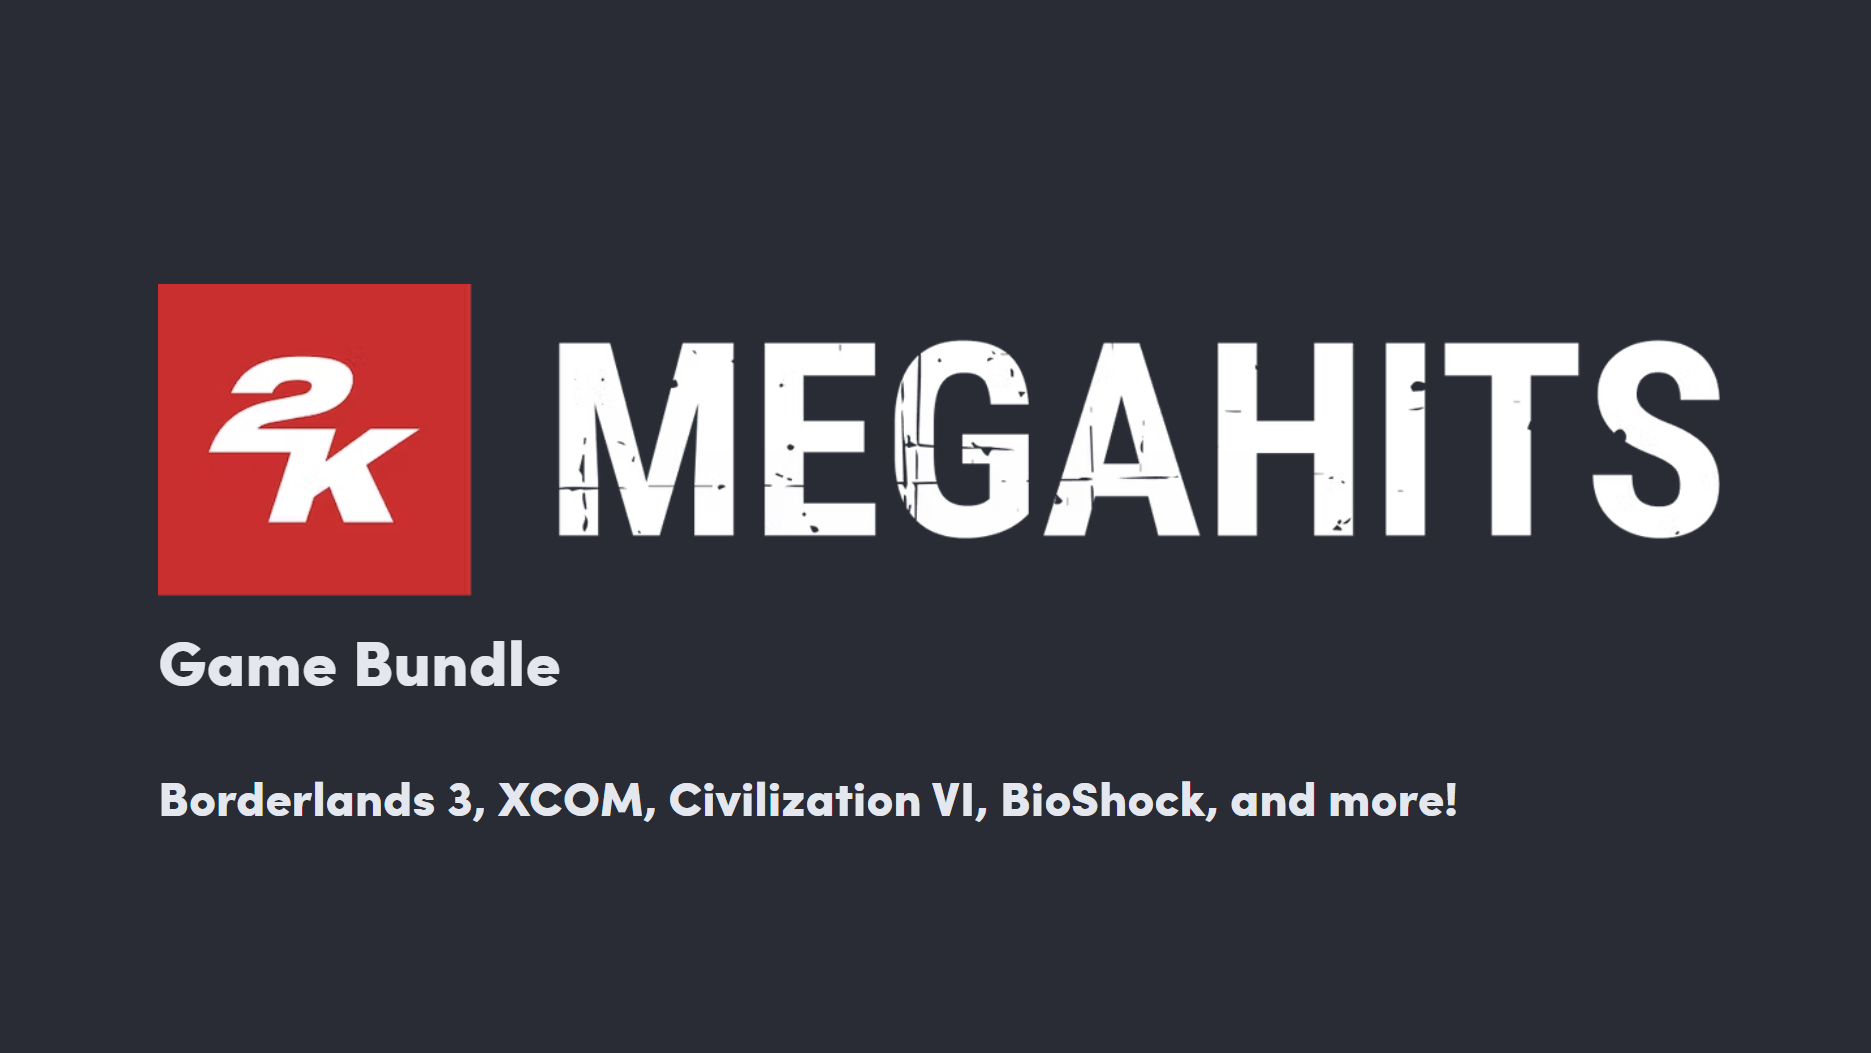 2k megahits game bundle, listing borderlands 3, xcom ultimate and so on.